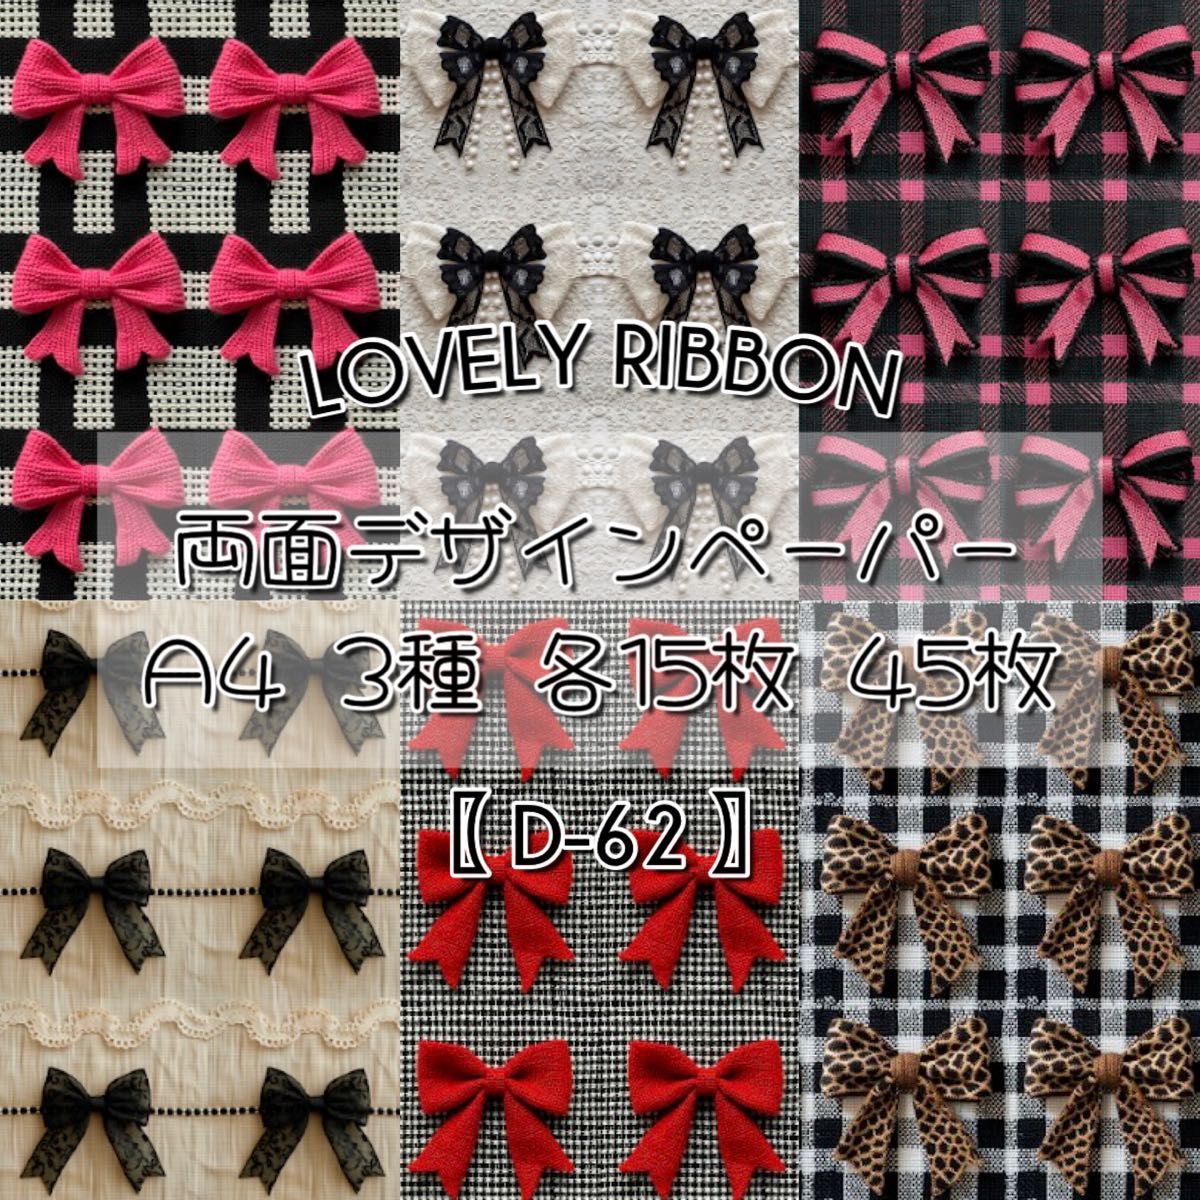 【D-62】Lovely Ribbon 30枚 デザインペーパー